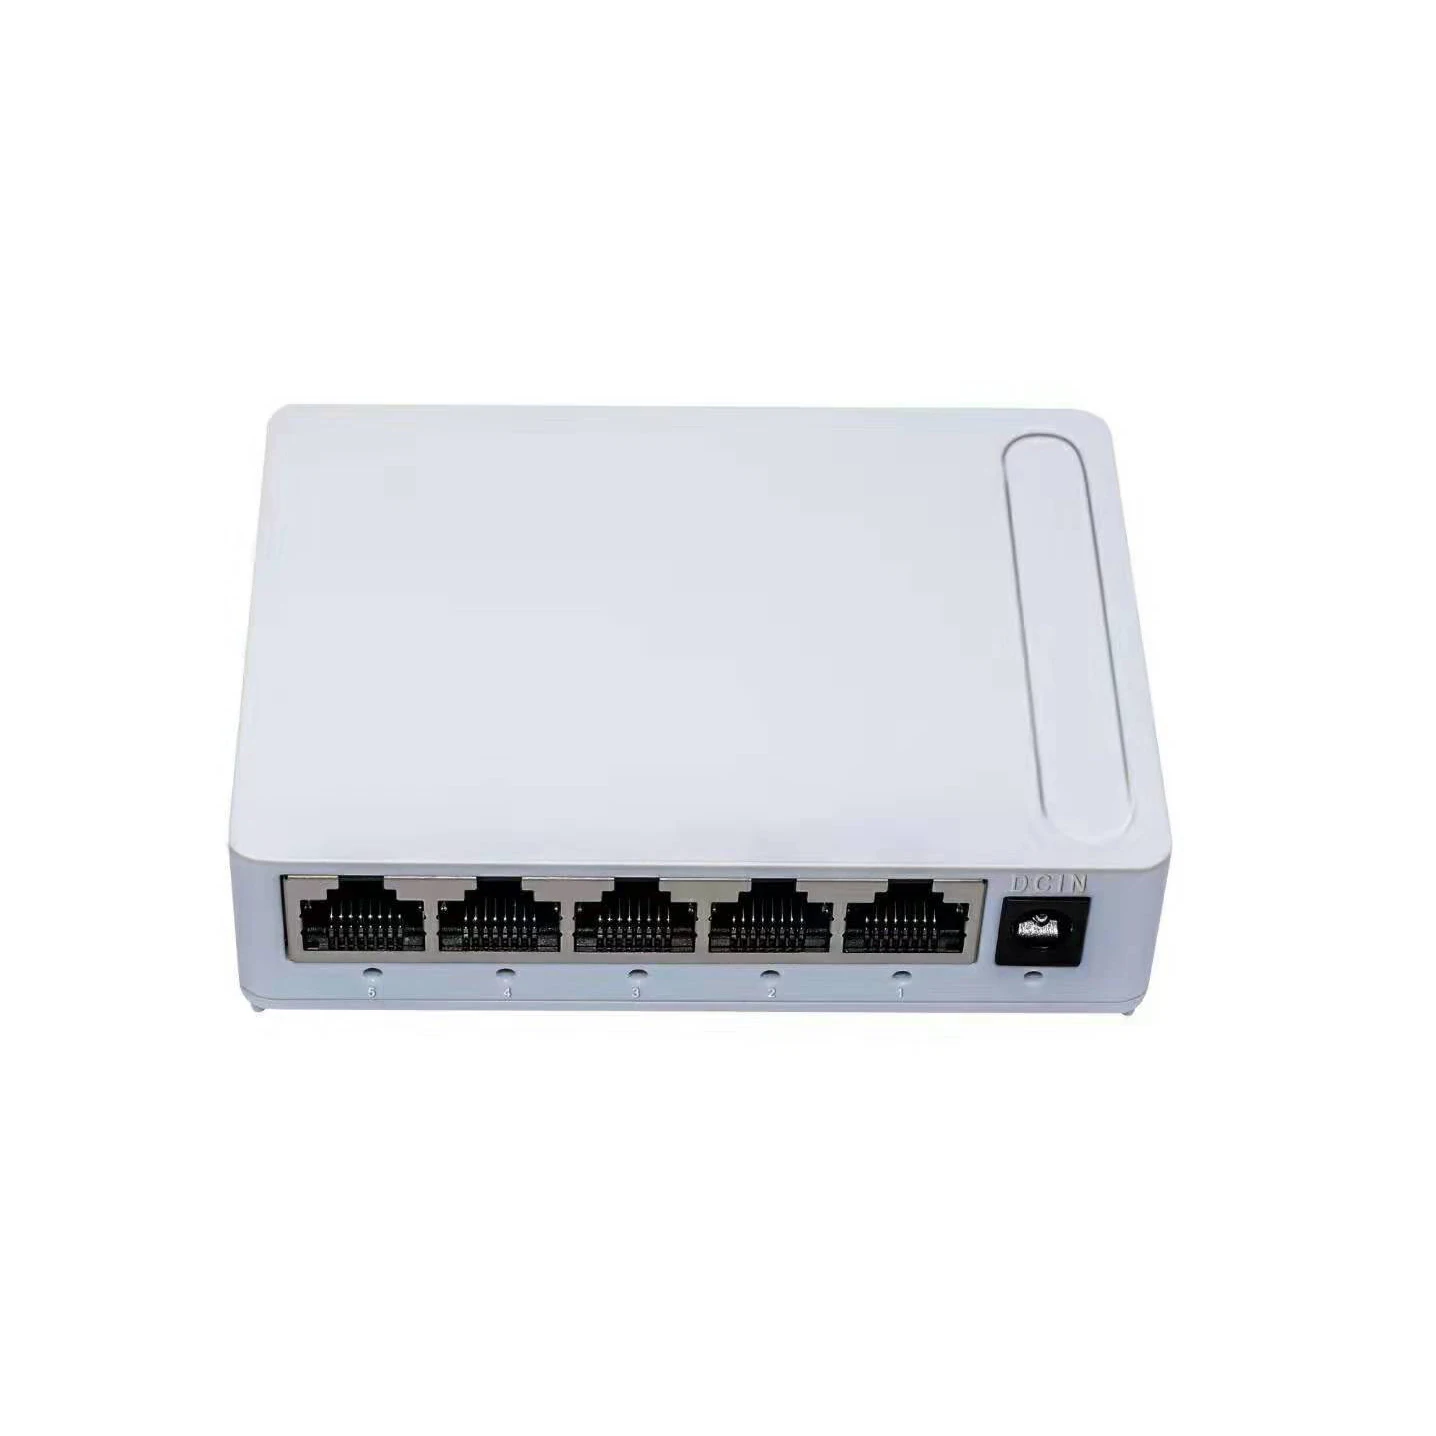 Shenzhen Factory Network Switch Gigabit 5-Port 10/100/1000Mbps Ethernet Unmanaged Switch